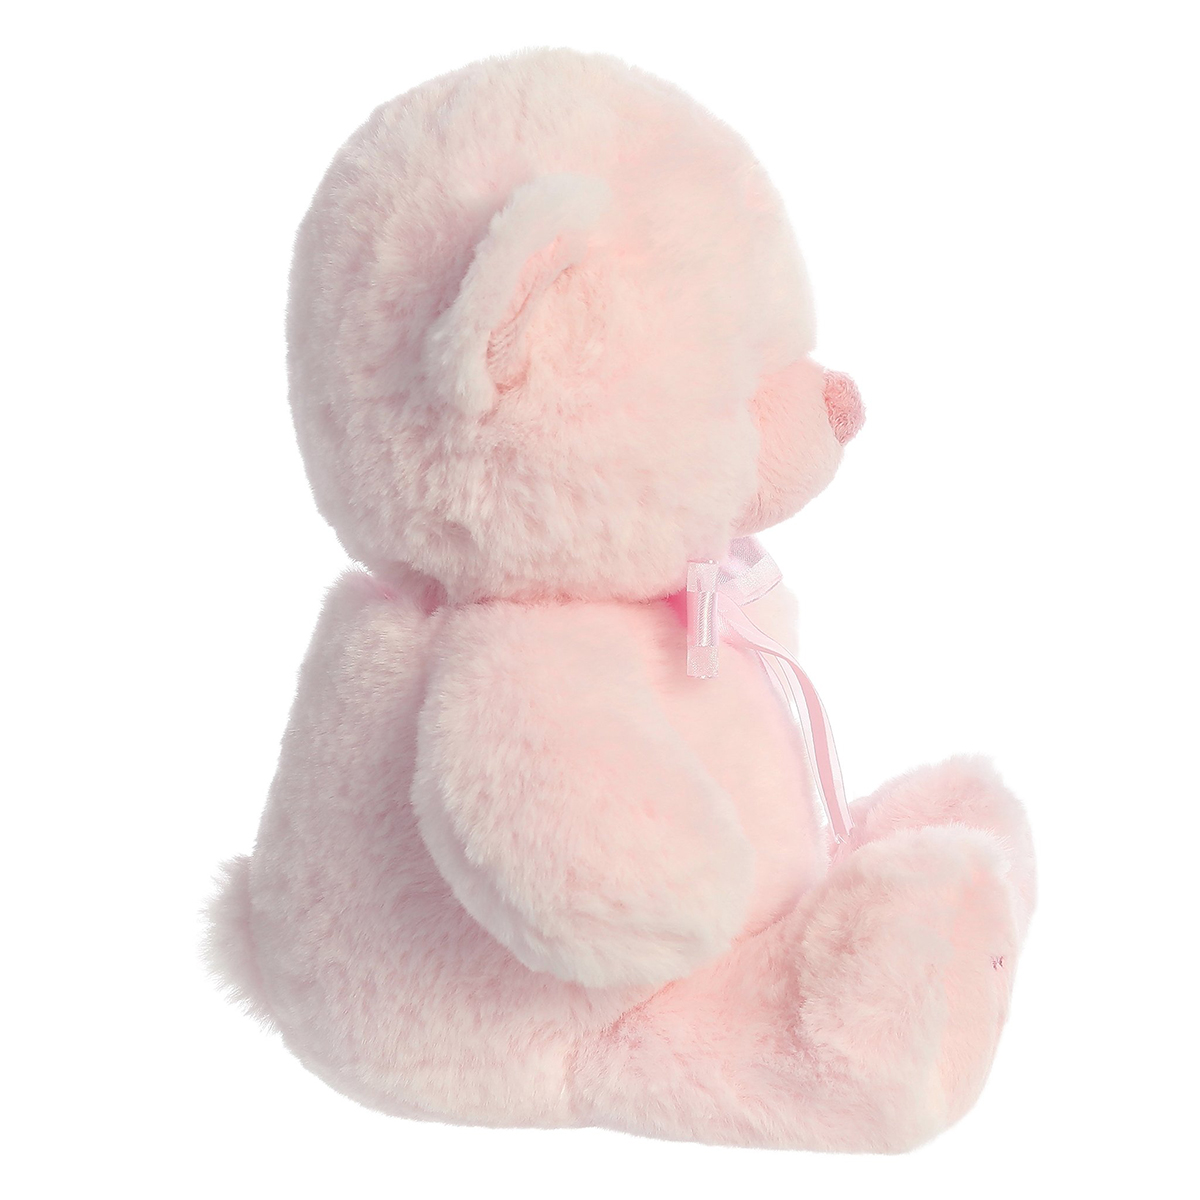 Baby Girl Ebba My 1st Teddy Bear - Pink